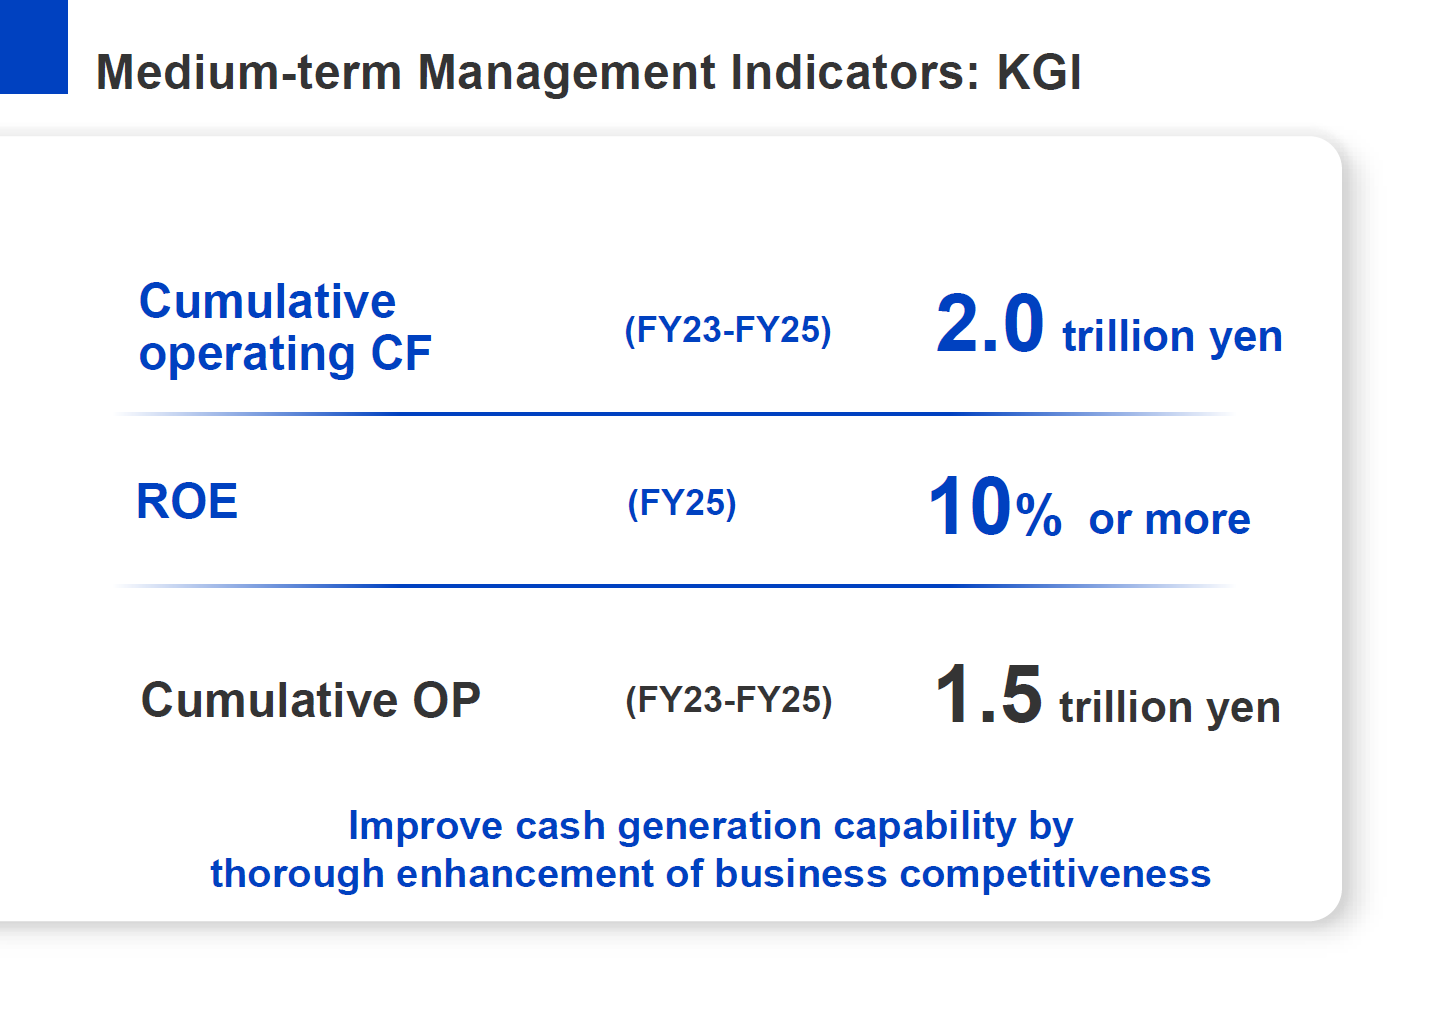 Figure: Medium-term Management Indicators: KGI